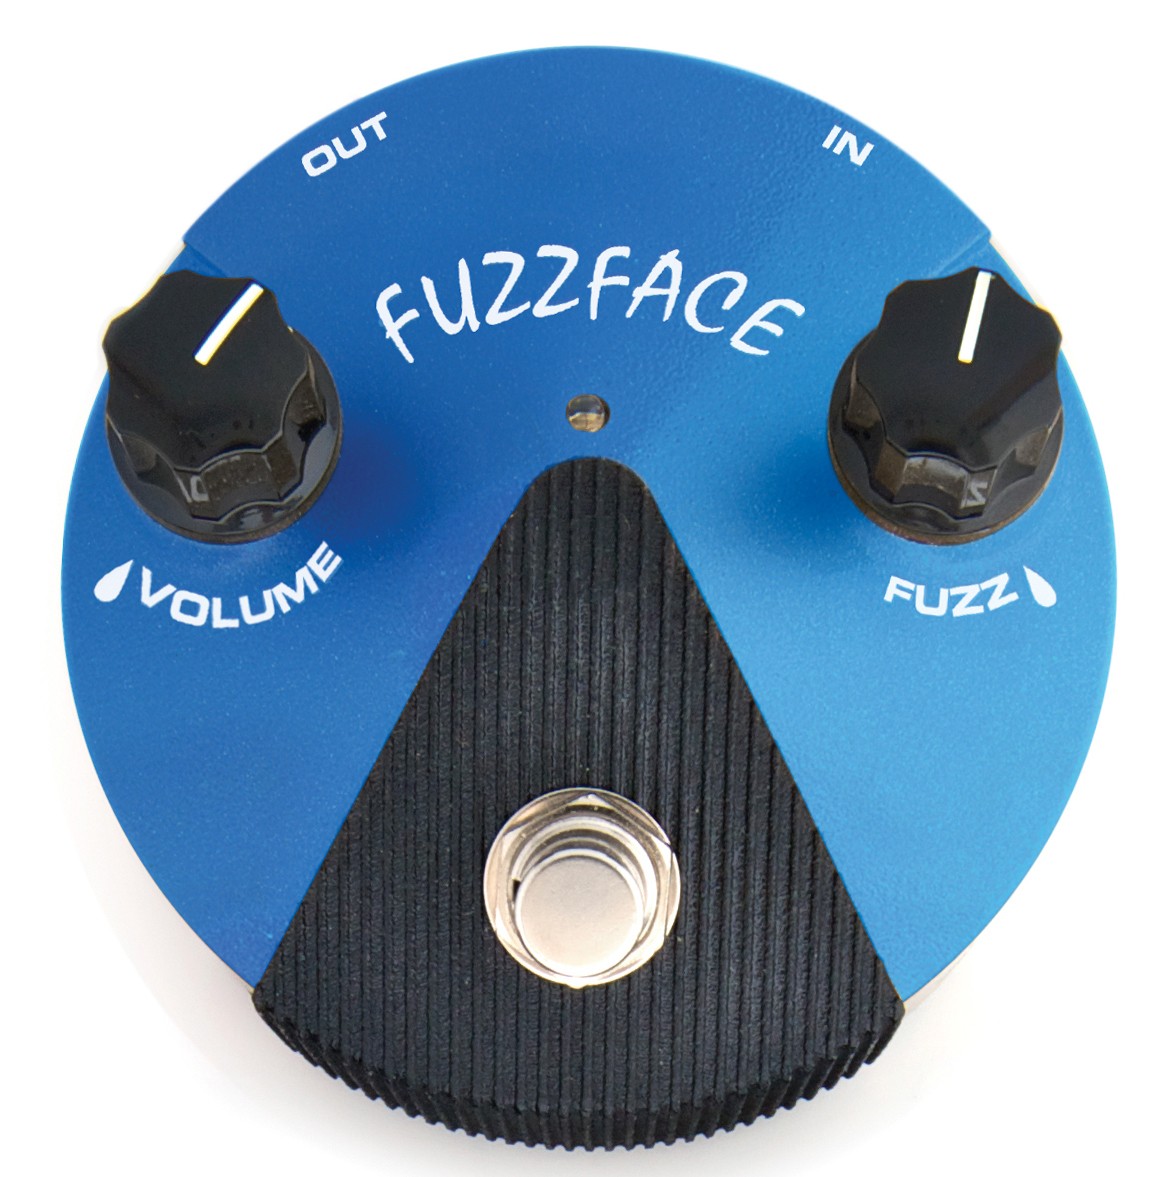 Dunlop FFM1 - Silicon Fuzz Face Mini